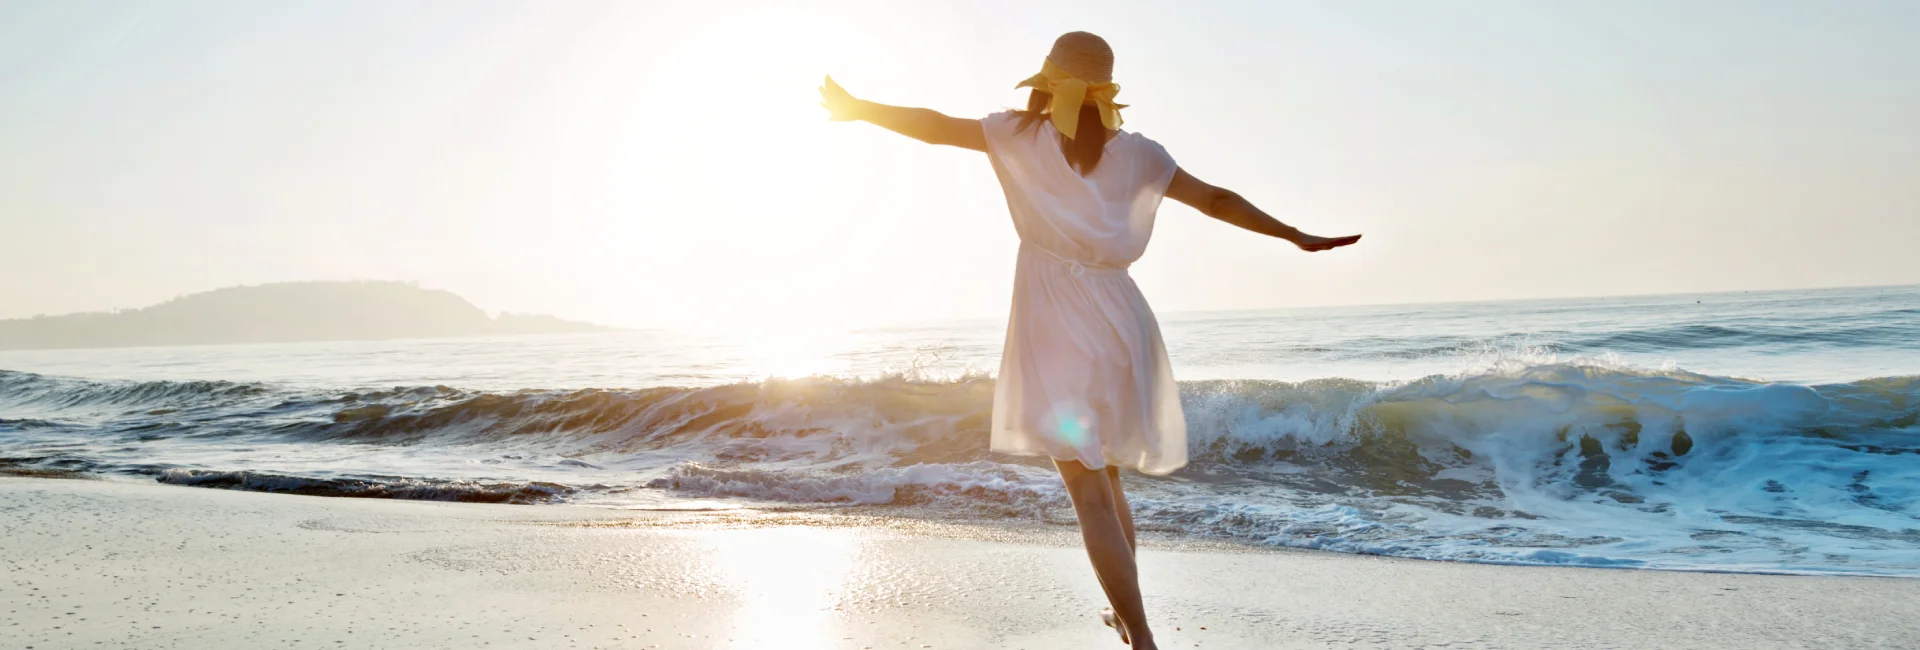 woman-wearing-white-dancing-at-beach-sunset-sunrise